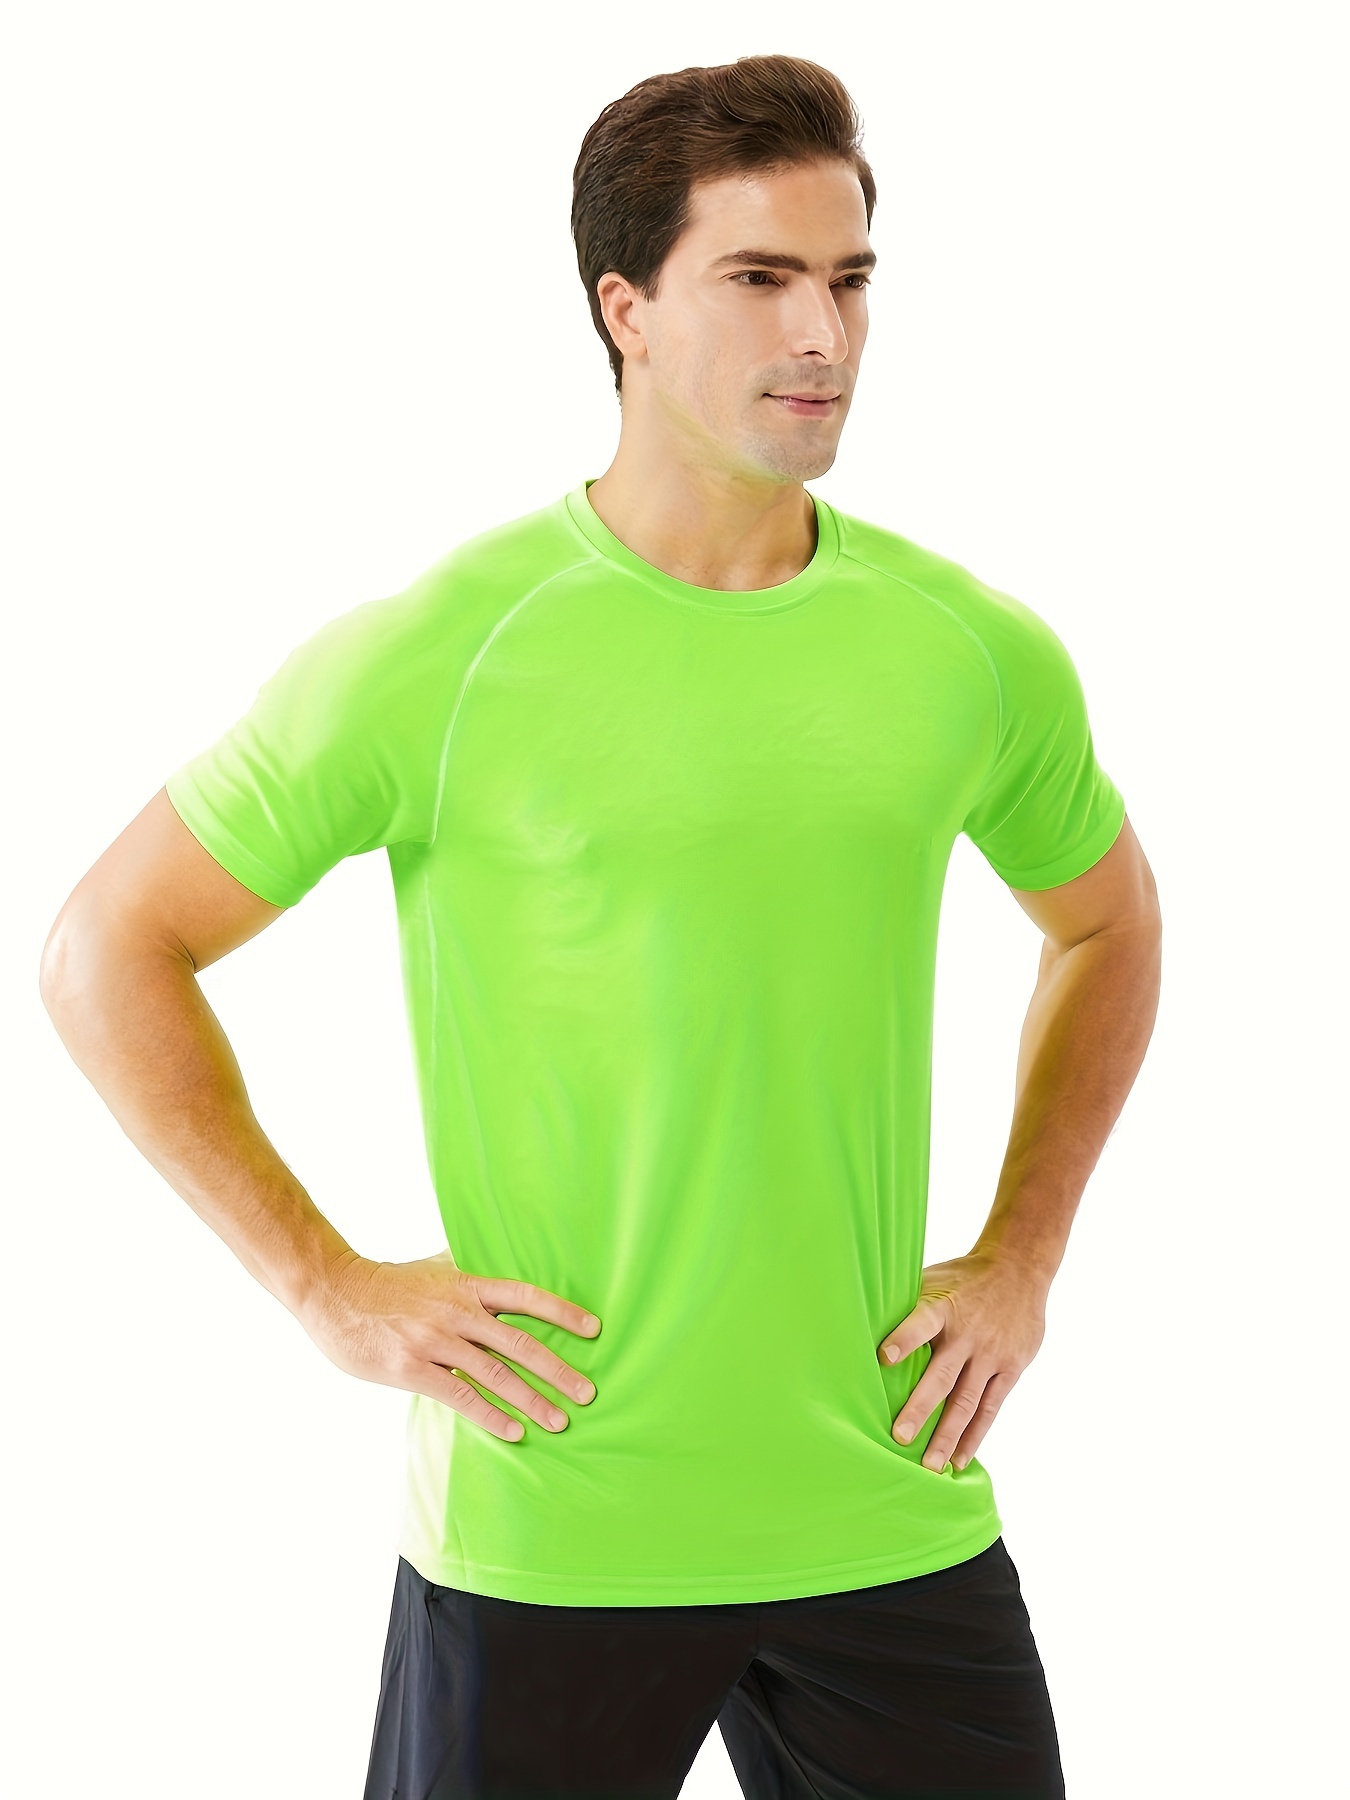 Neon Yellow Sports T-Shirt  Men's Activewear & Sportswear